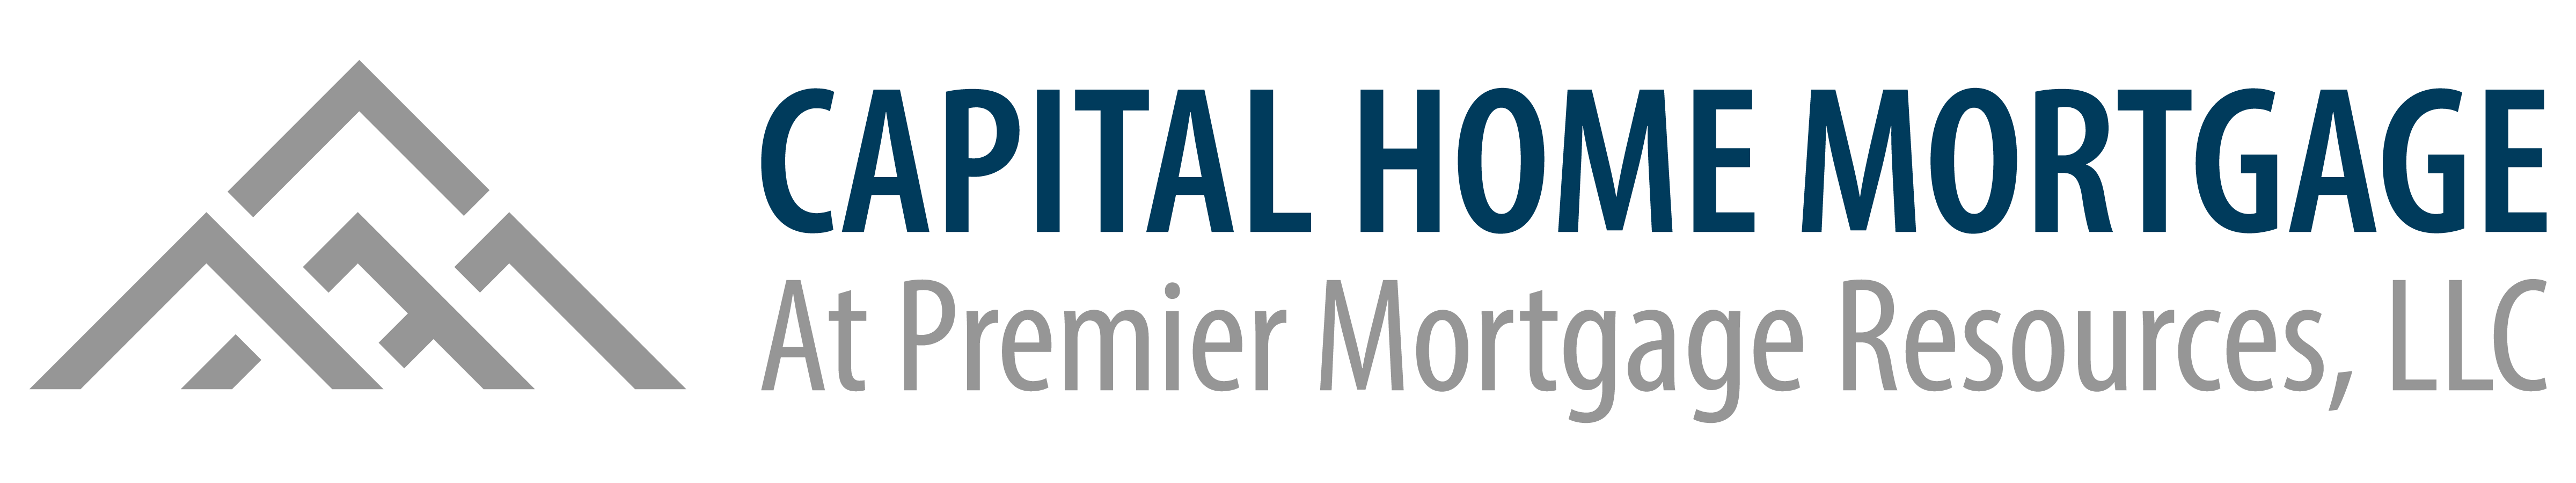 Capital Home Mortgage